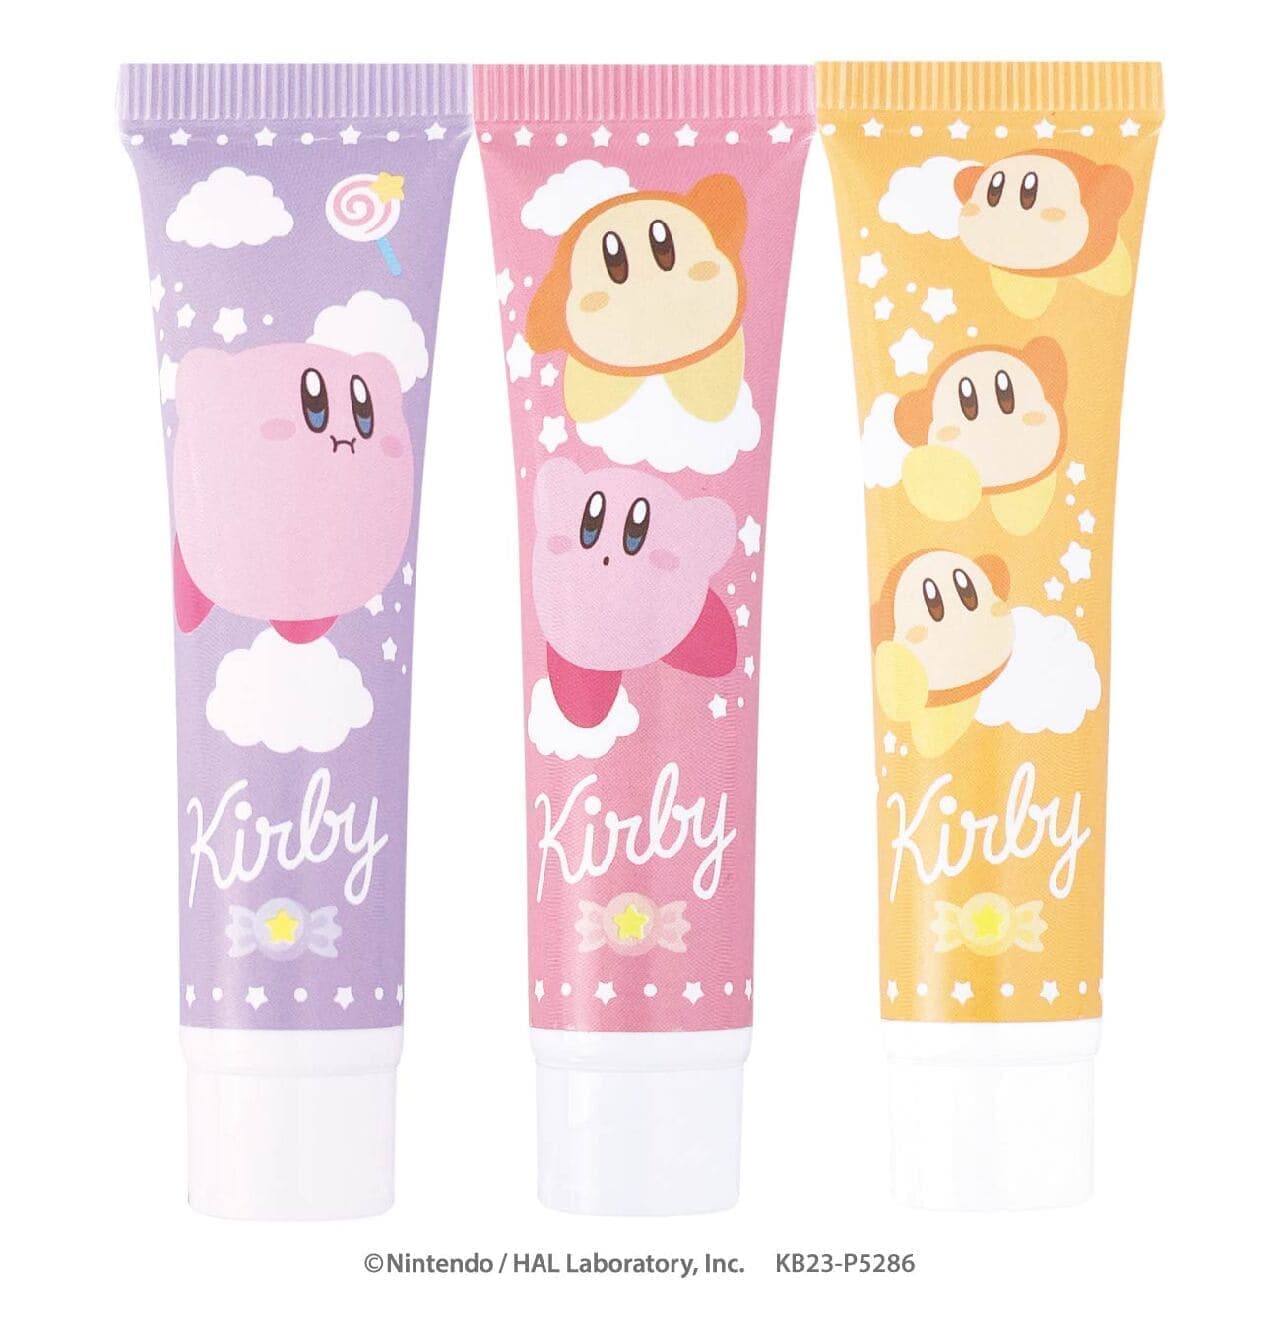 Shobido "Kirby the Star" hand cream set